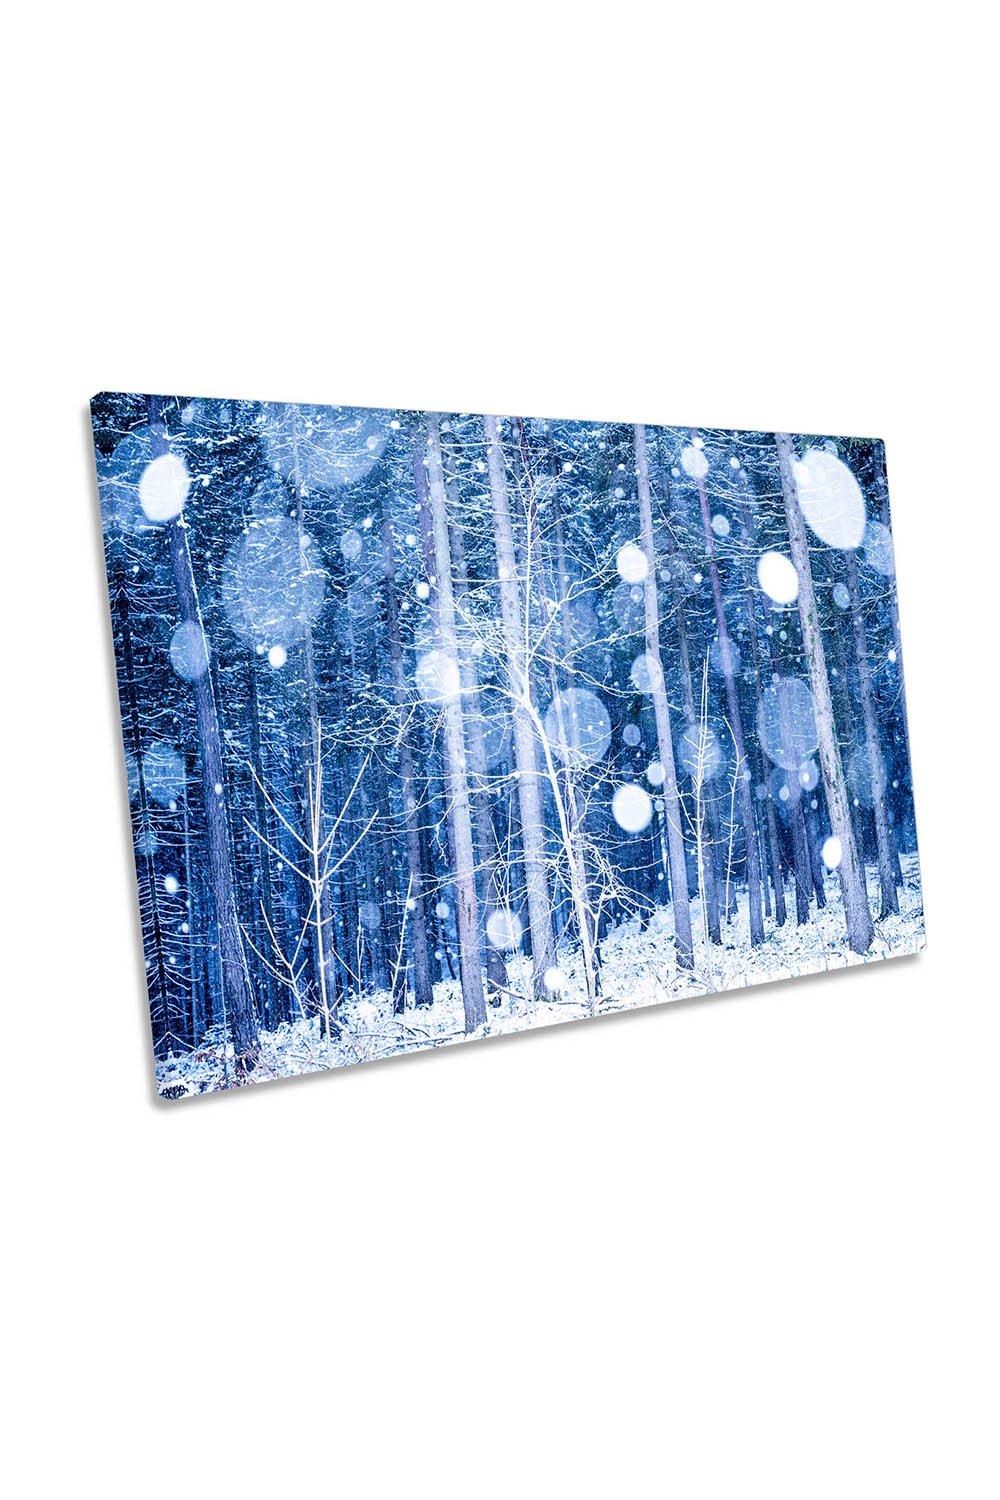 Snowscape Blue Forest Winter Scene Canvas Wall Art Picture Print